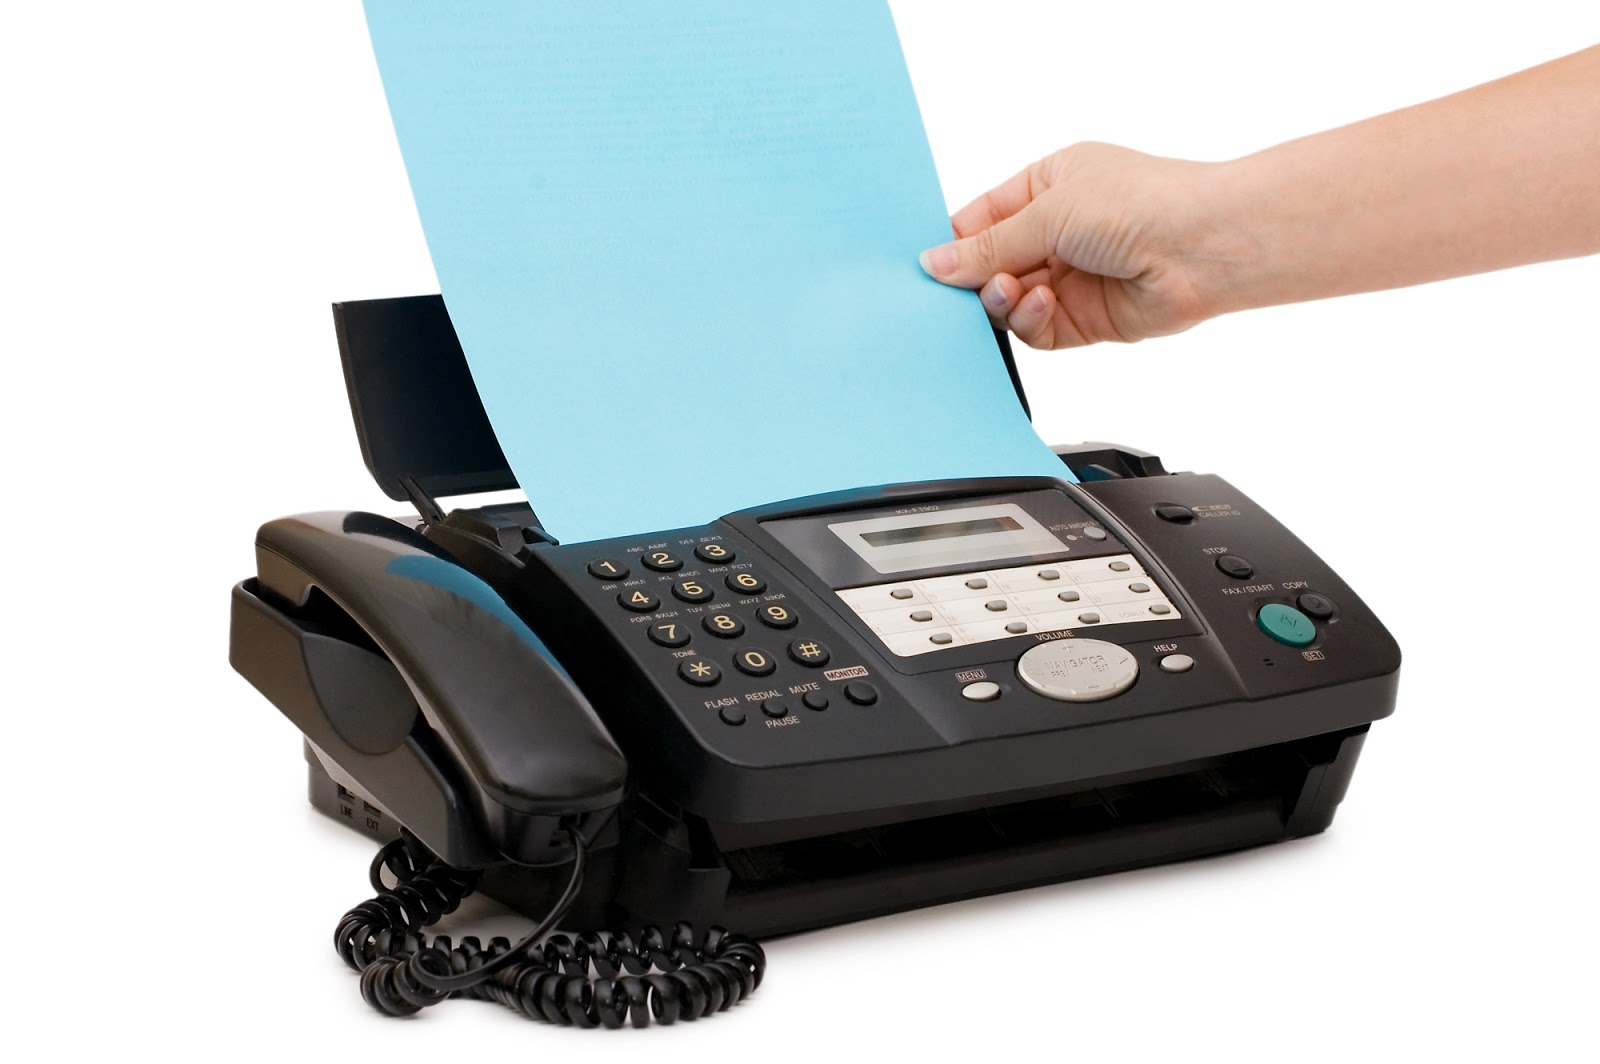 Pengertian dan Fungsi Fax di Industri Perhotelan